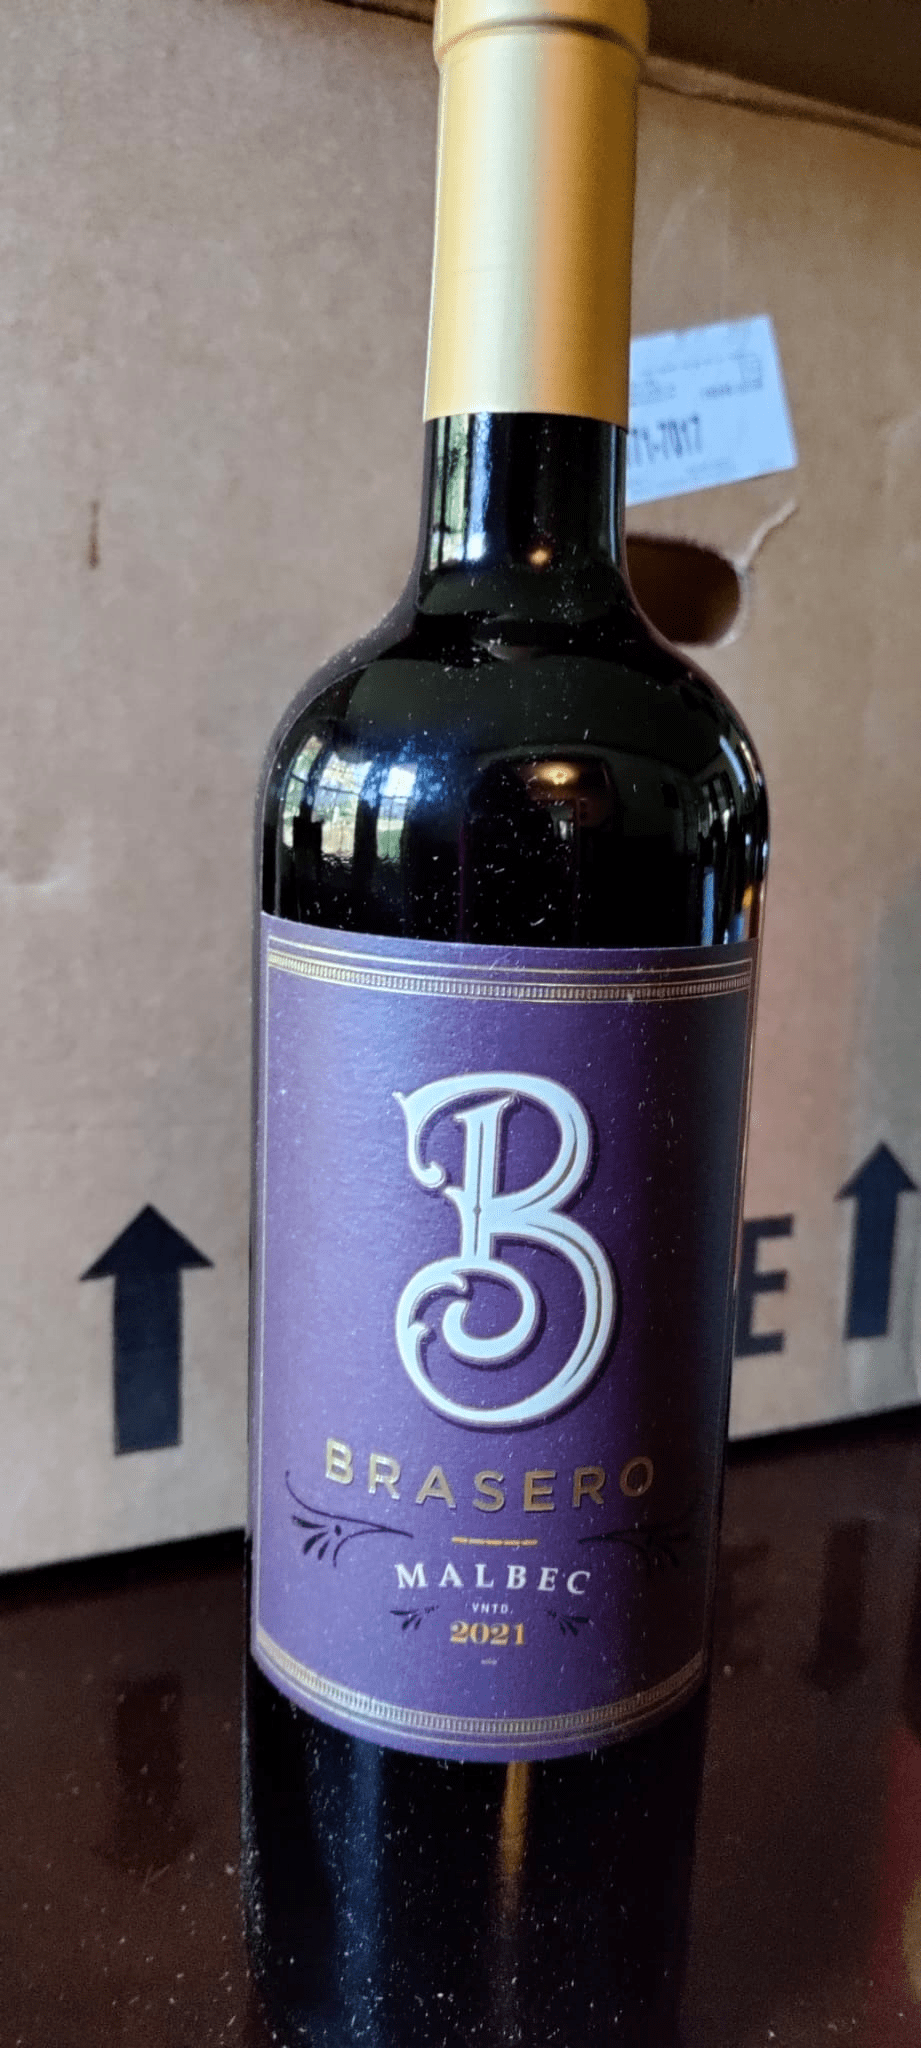 Bottle of Brasero, Malbec.